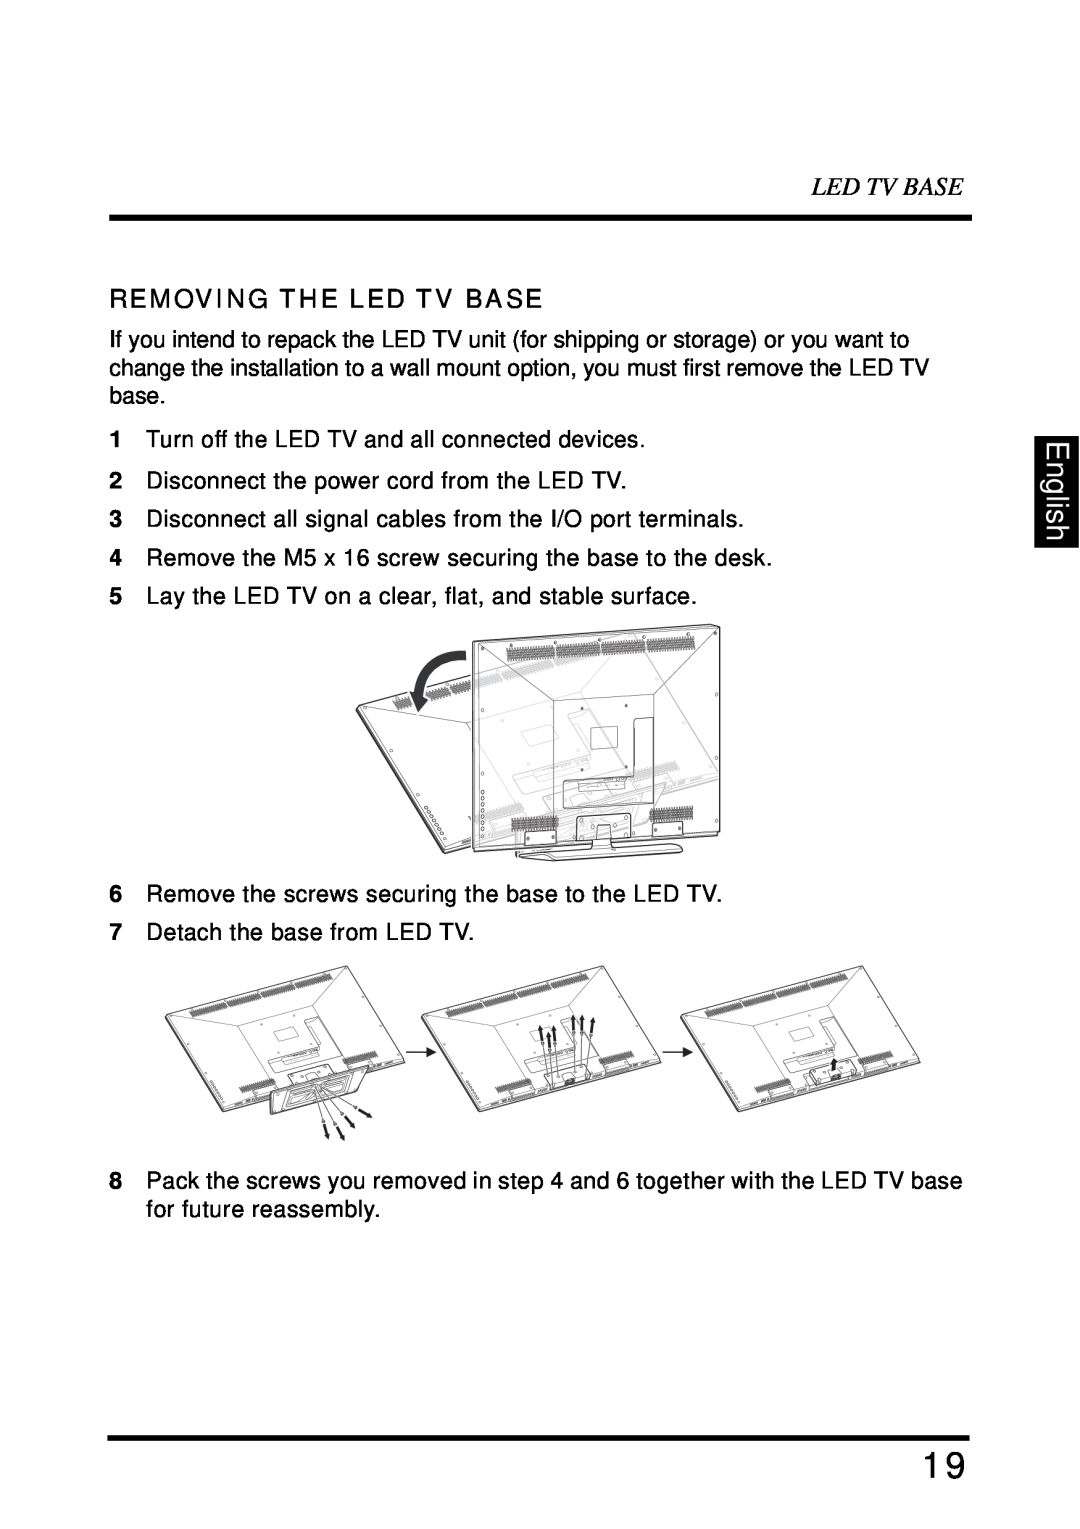 Westinghouse LD-4680 user manual English, Removing The Led Tv Base 